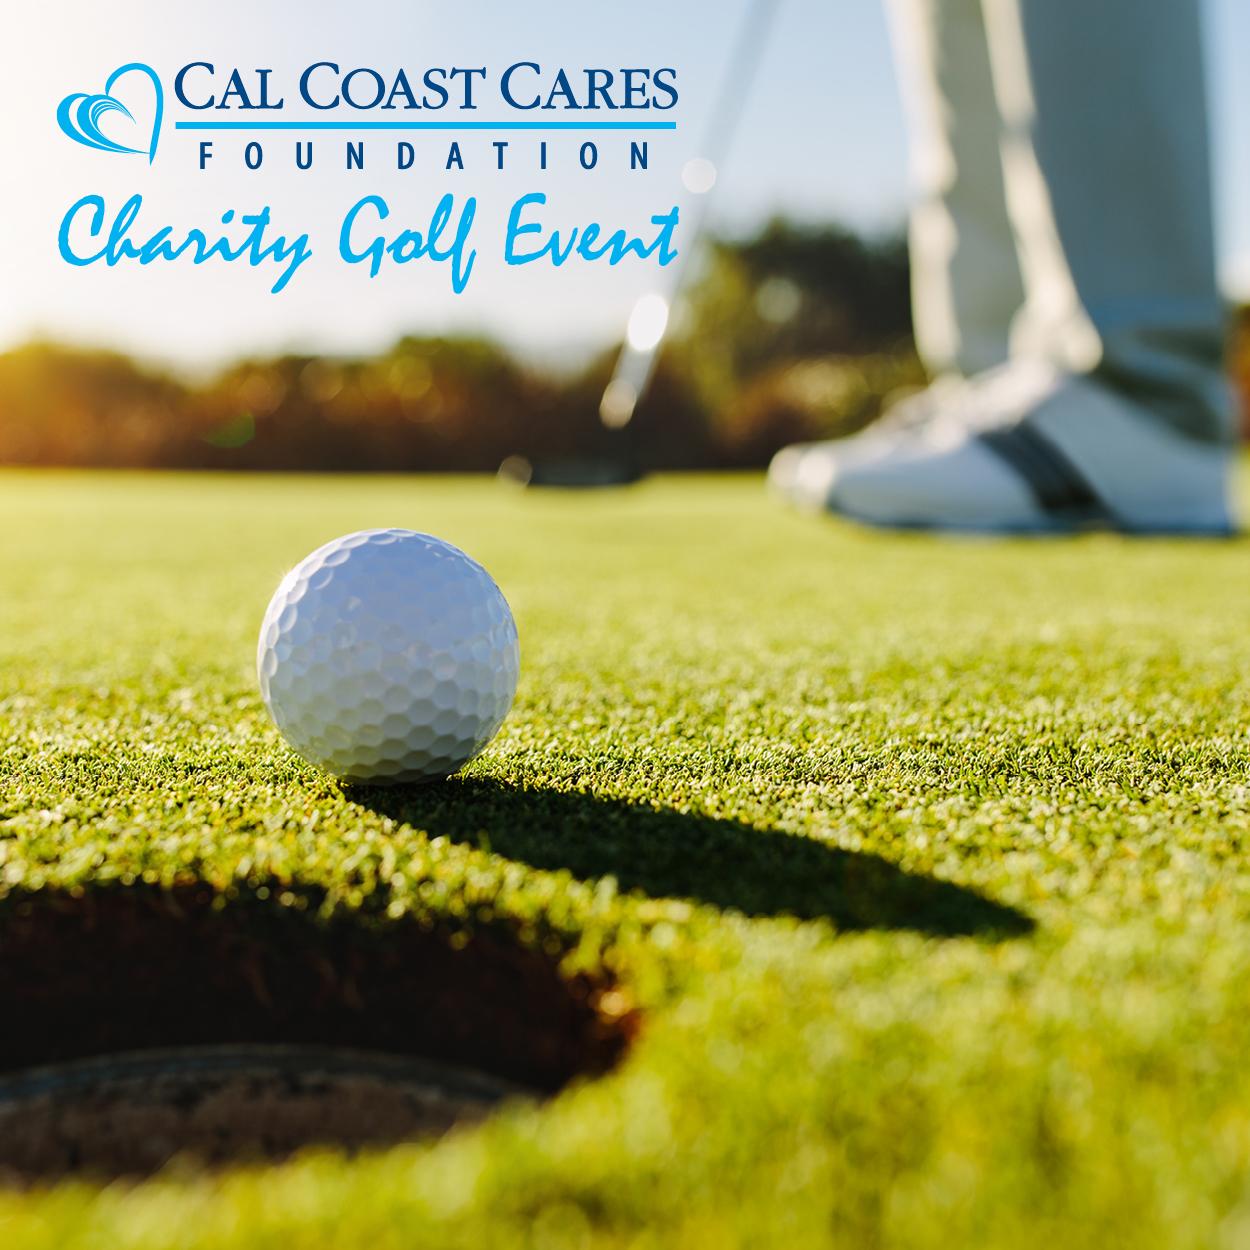 3rd Annual Cal Coast Cares Foundation Charity Golf Event